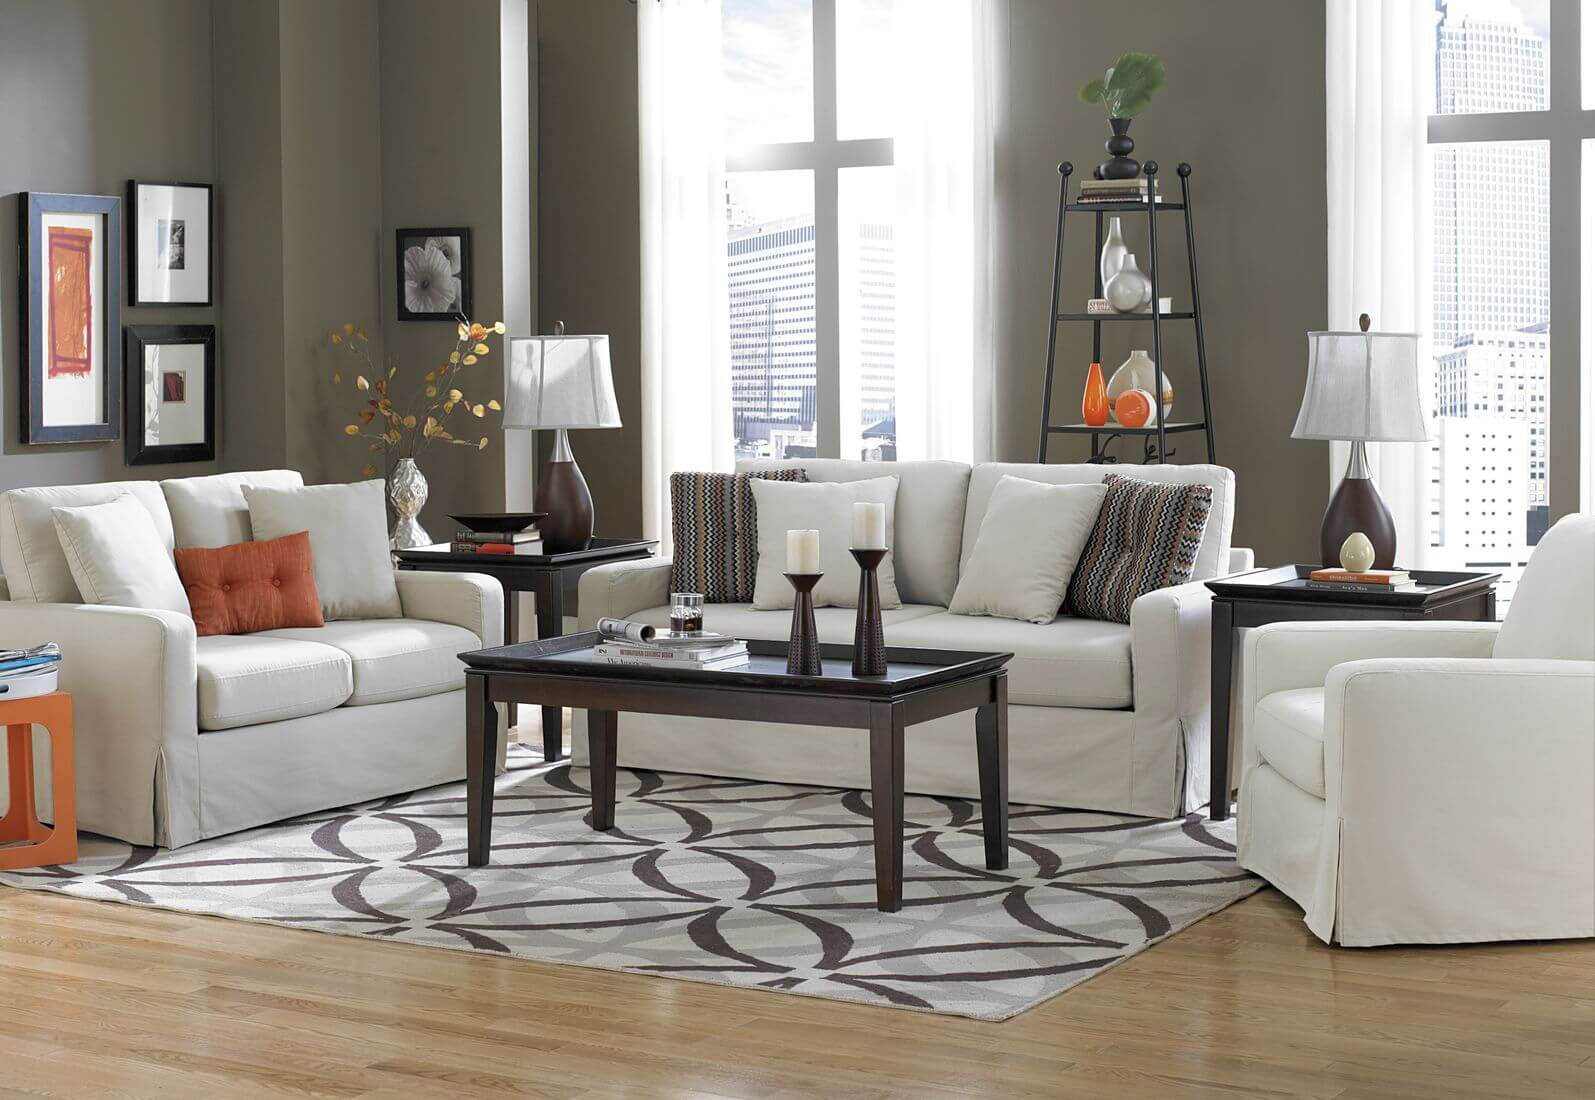 Best Rugs For Living Room
 Living room rug 18 rules for right choosing